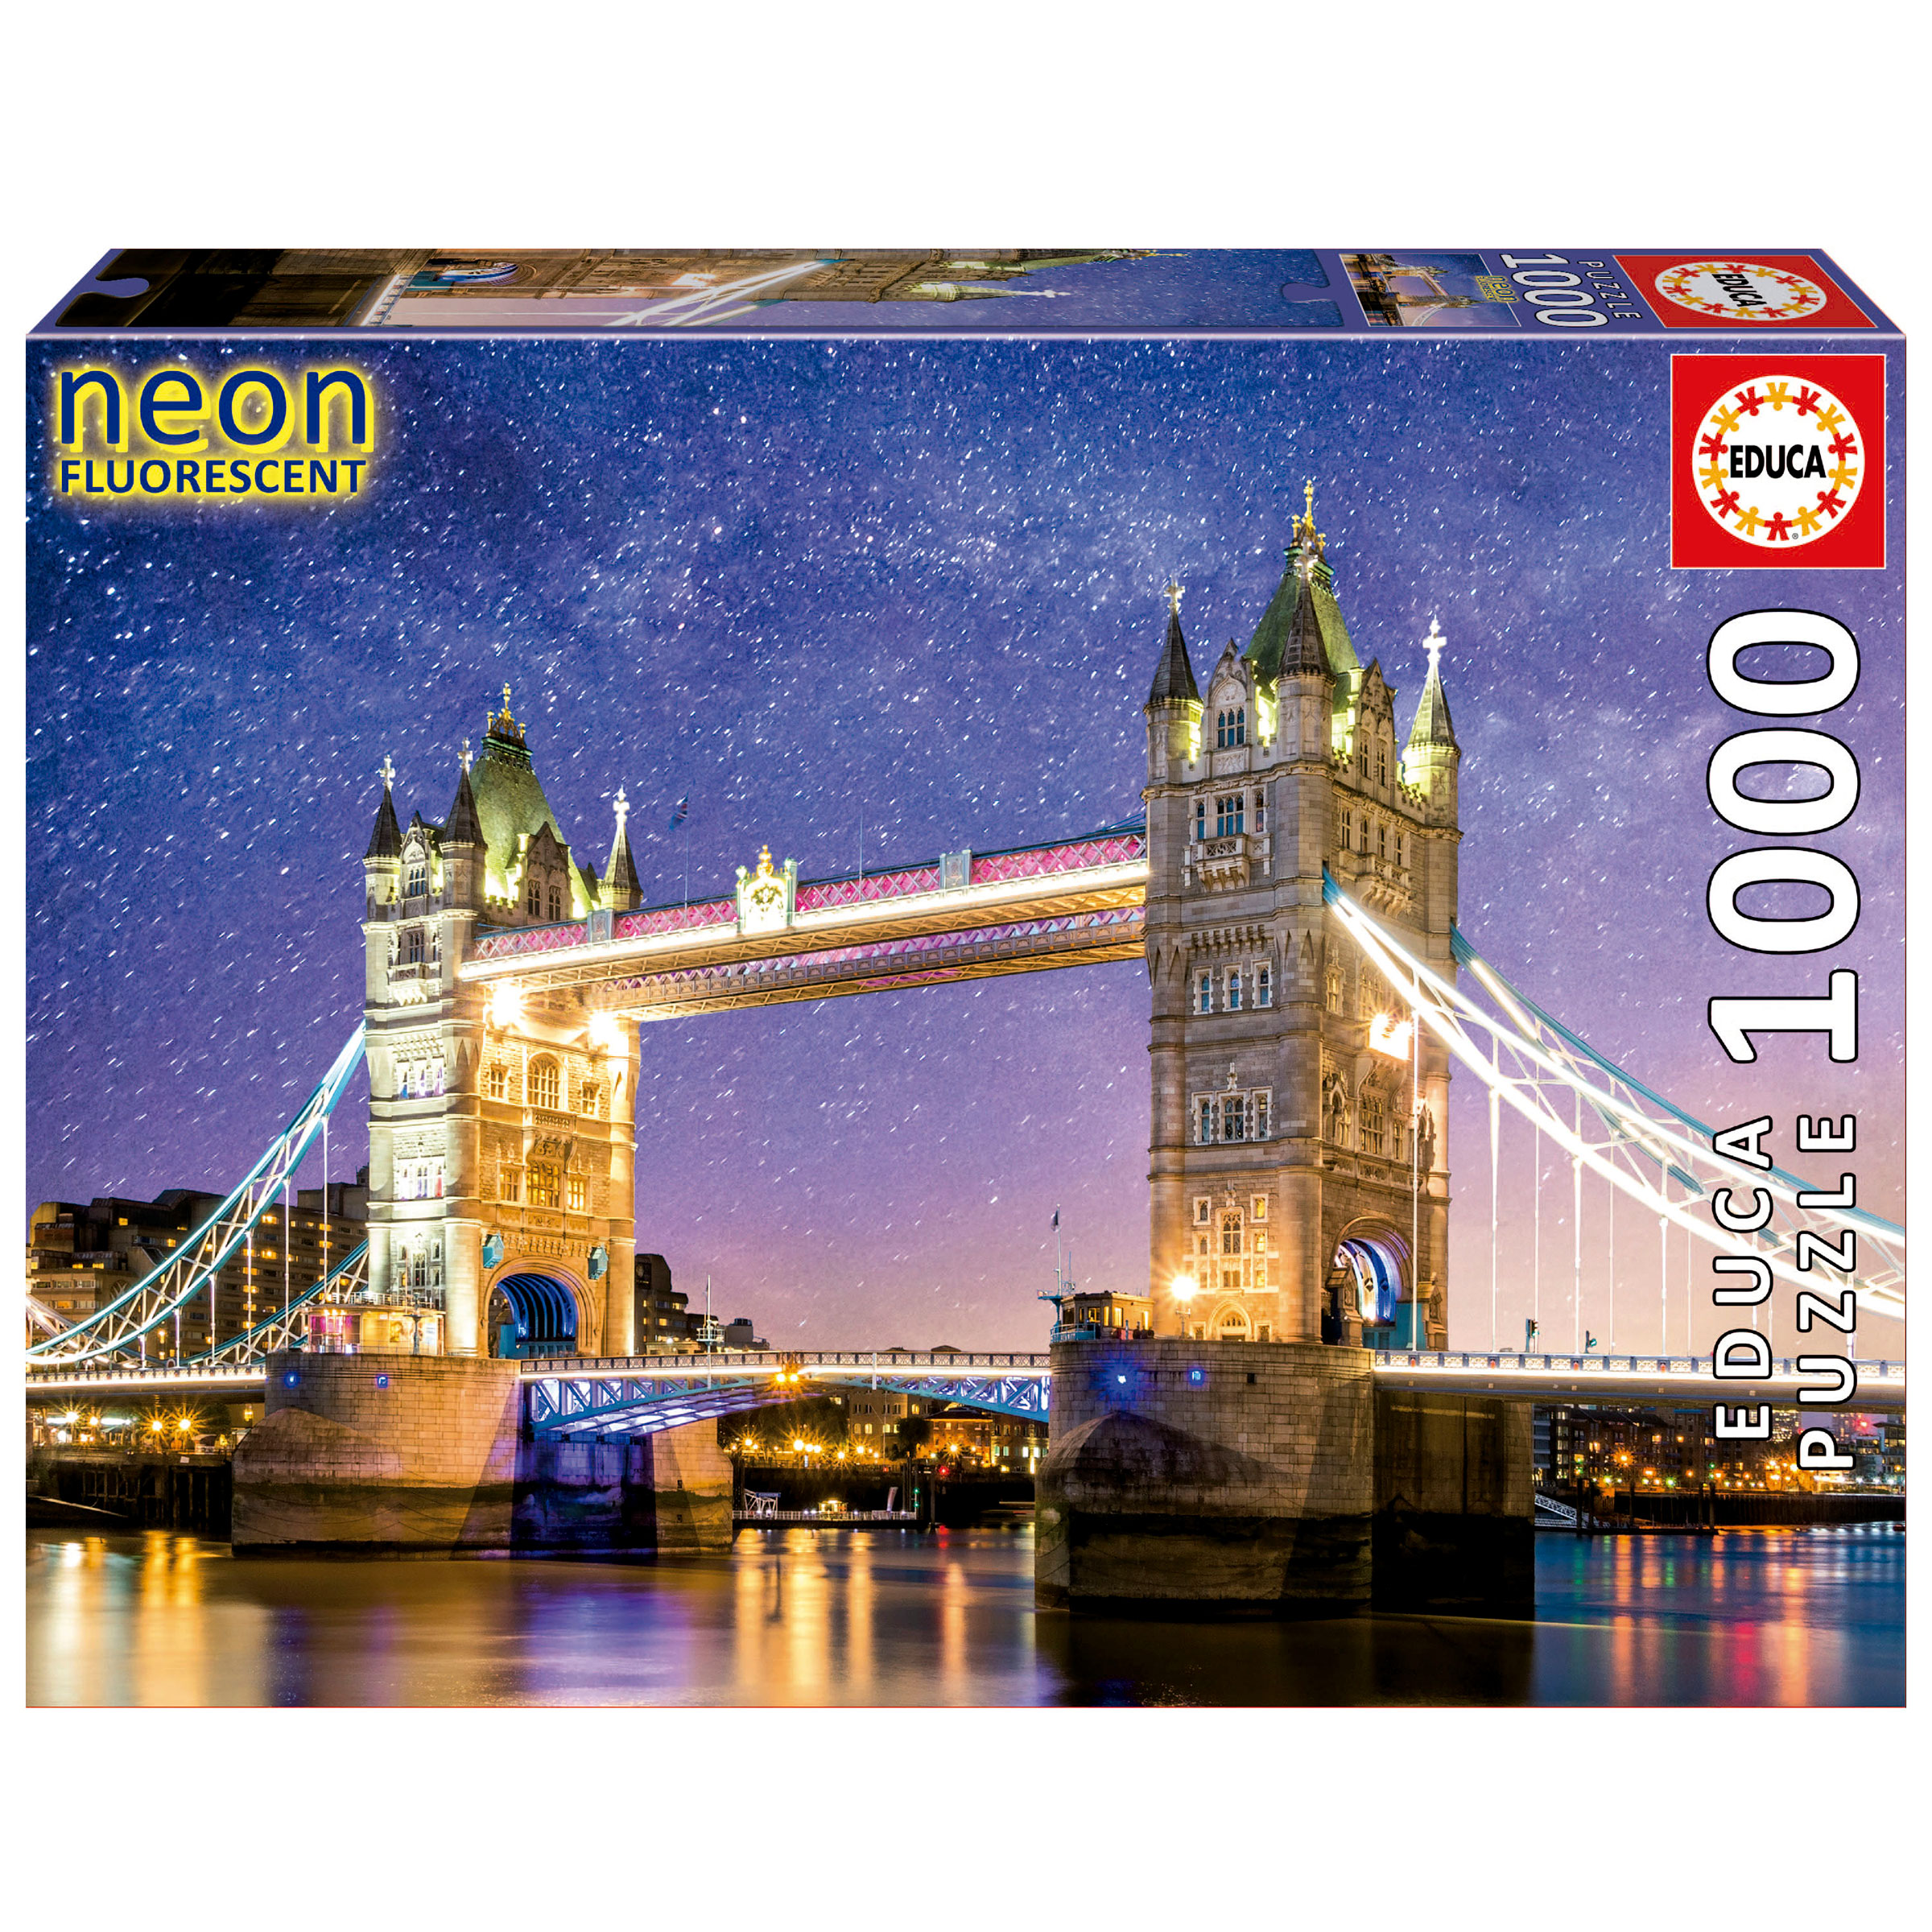 1000 Tower Bridge, London “Neon”